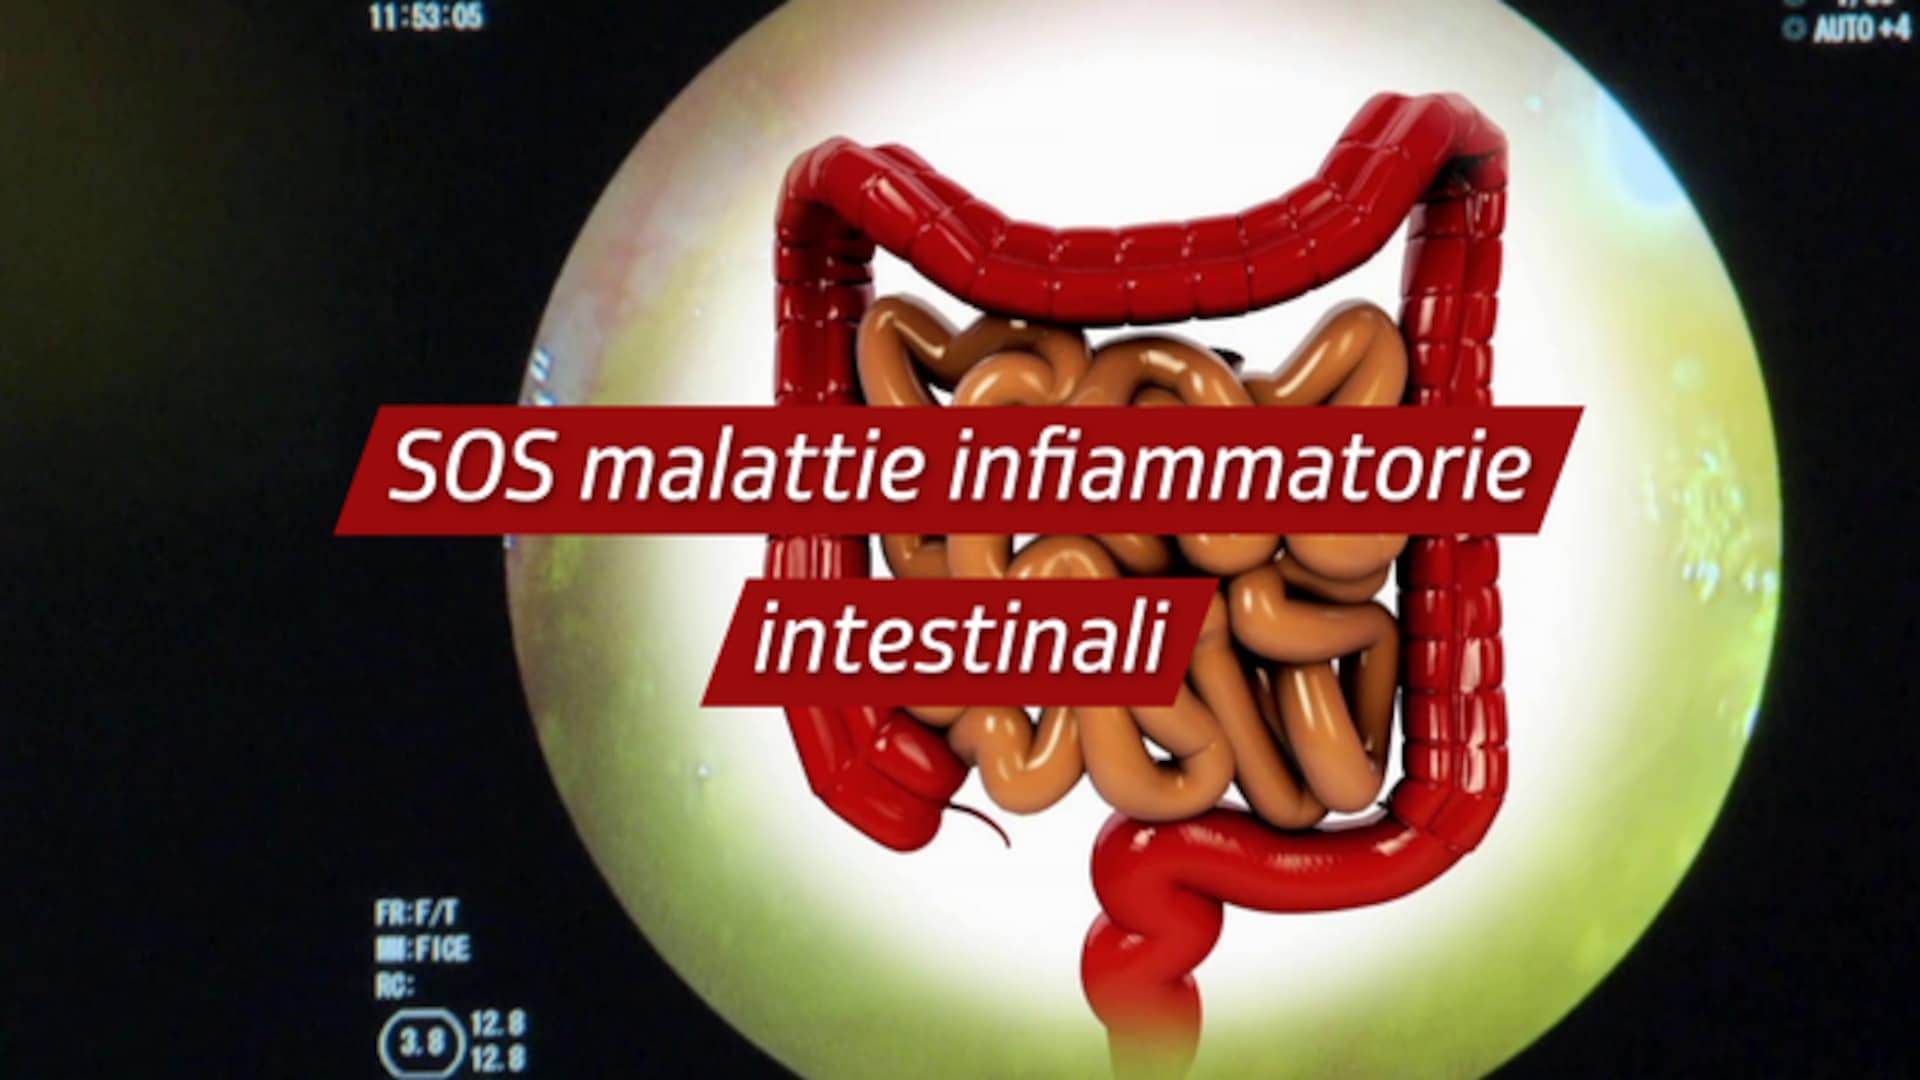 SOS malattie infiammatorie intestinali